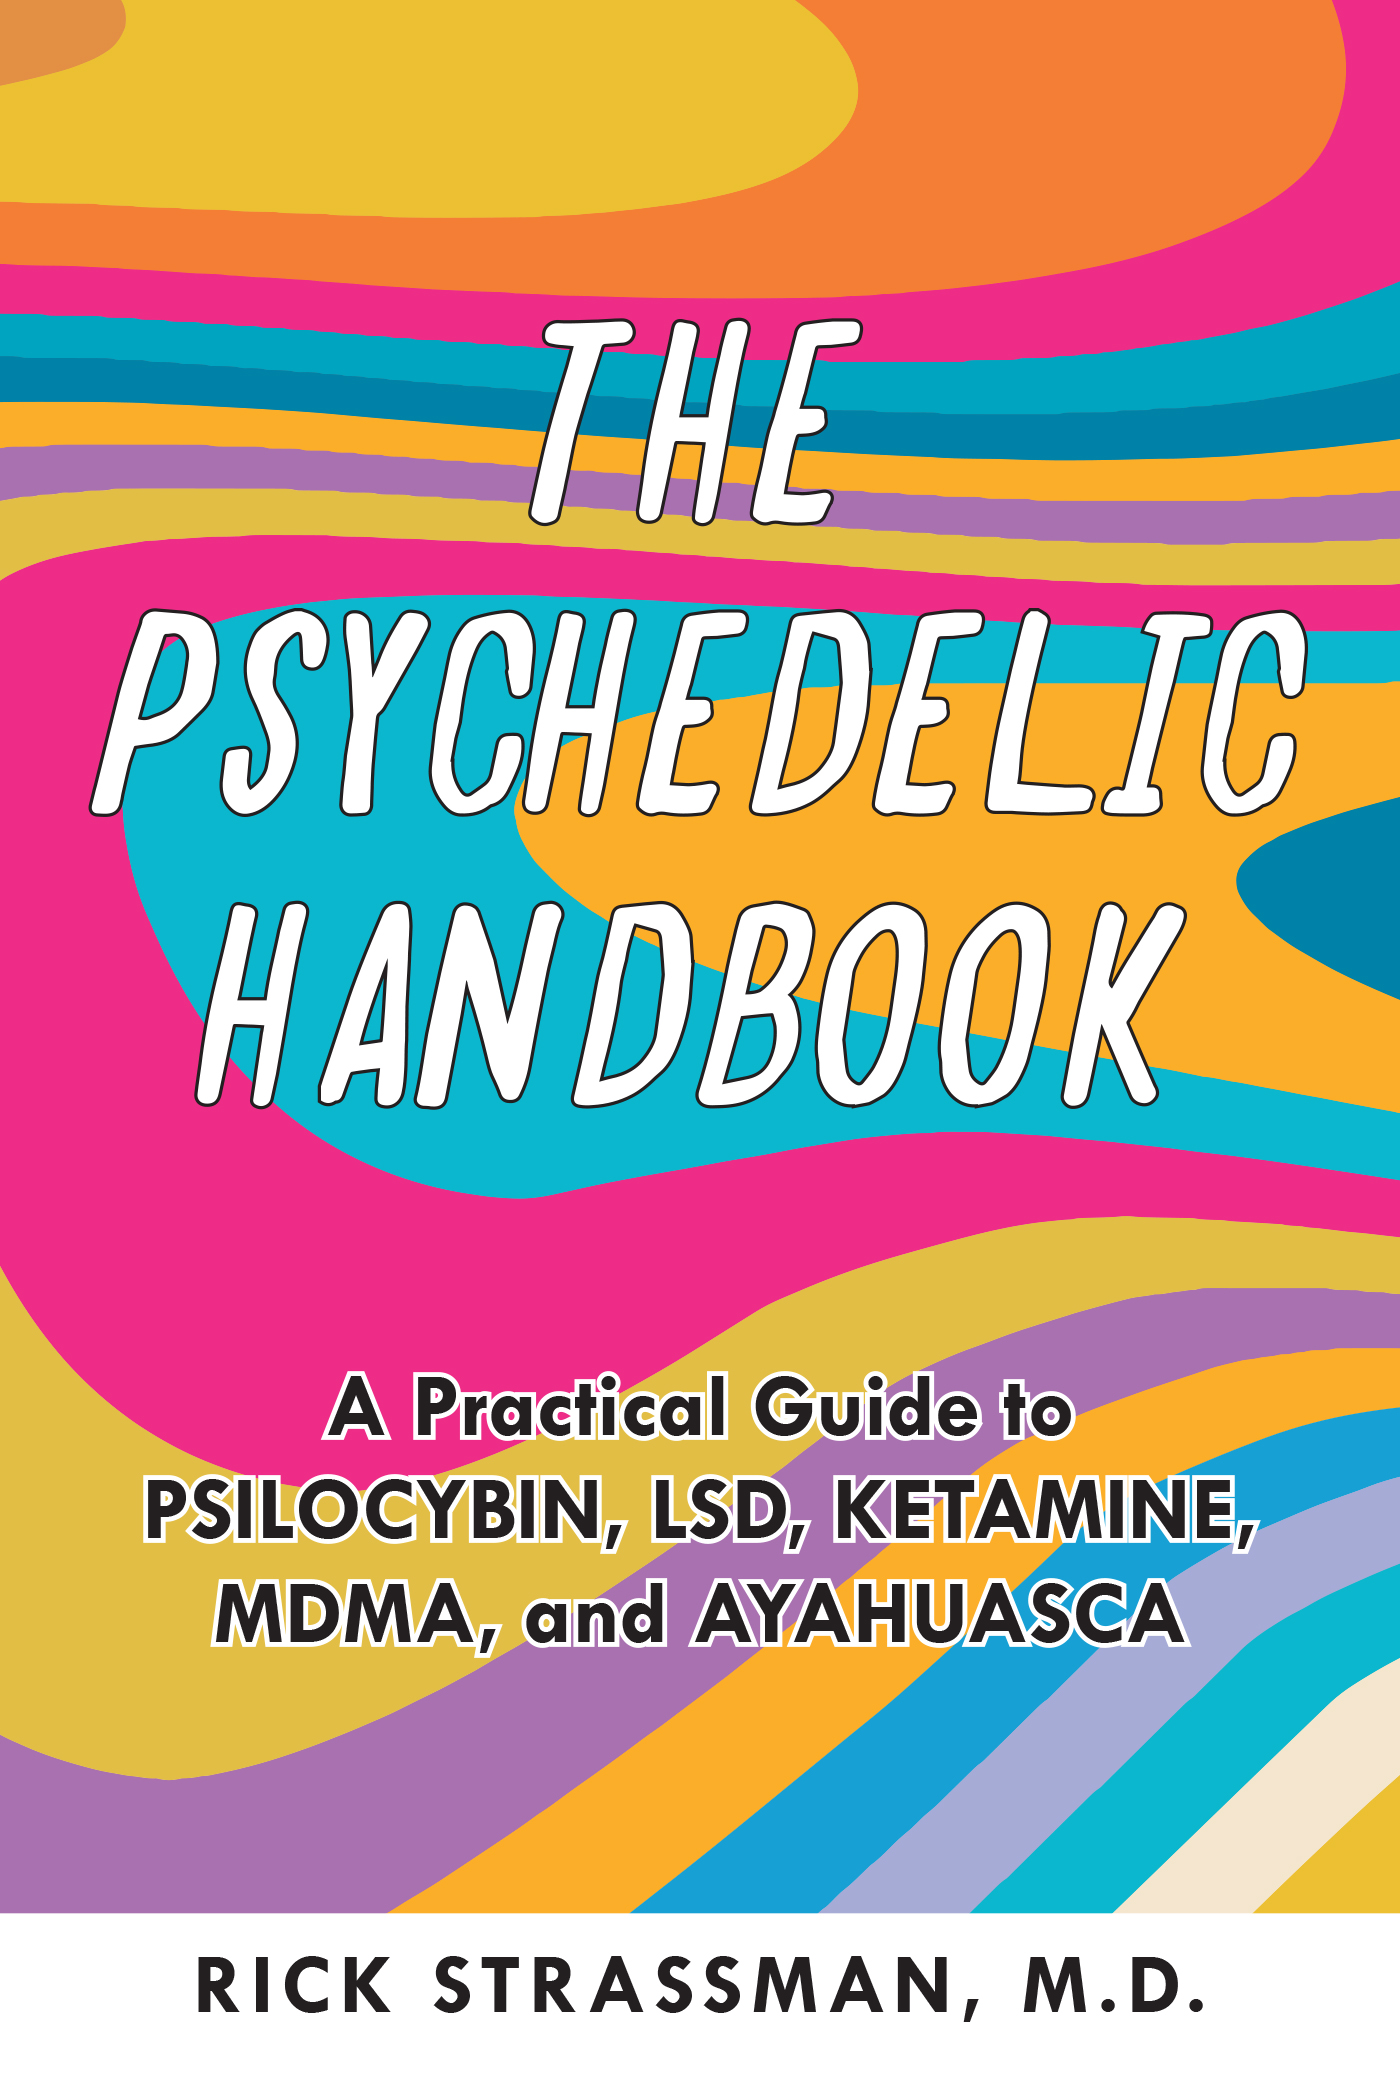 Psychedelic Handbook-front.indd